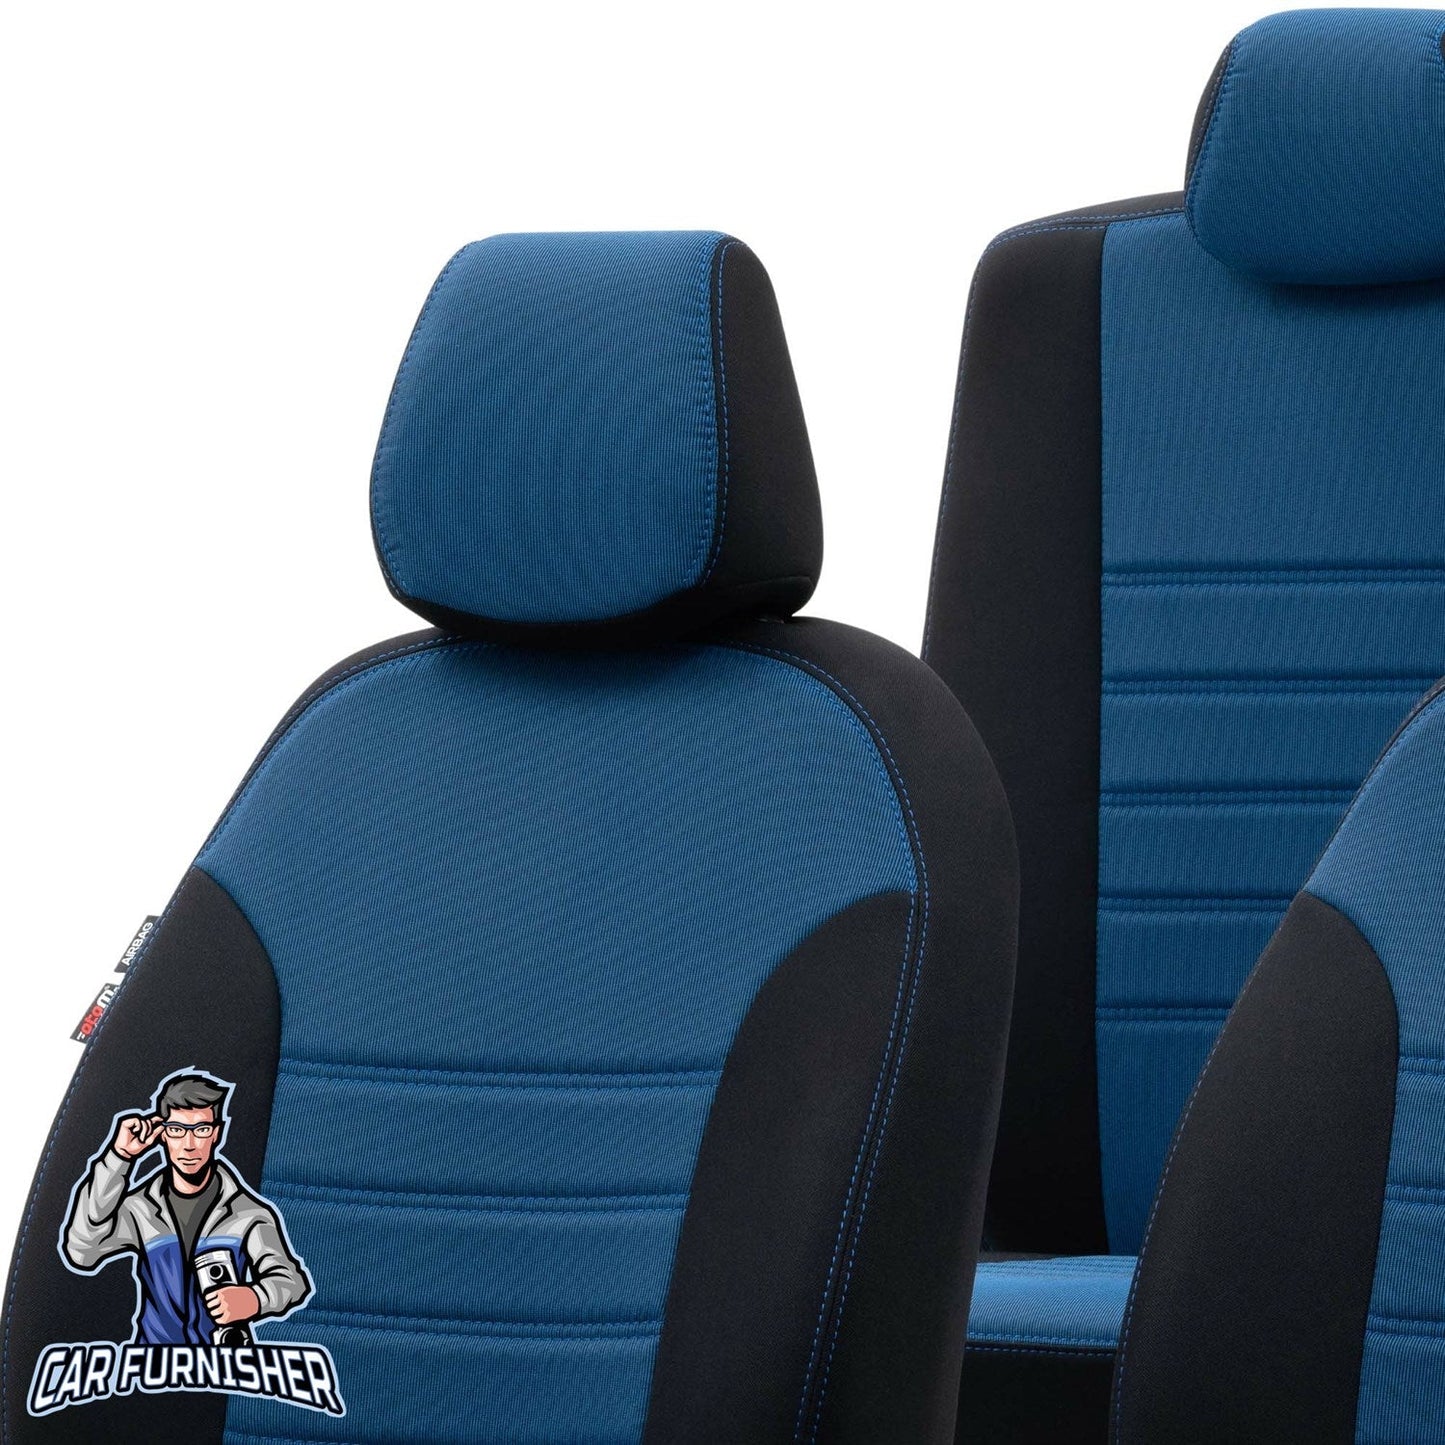 Kia Cerato Seat Covers Original Jacquard Design Blue Jacquard Fabric